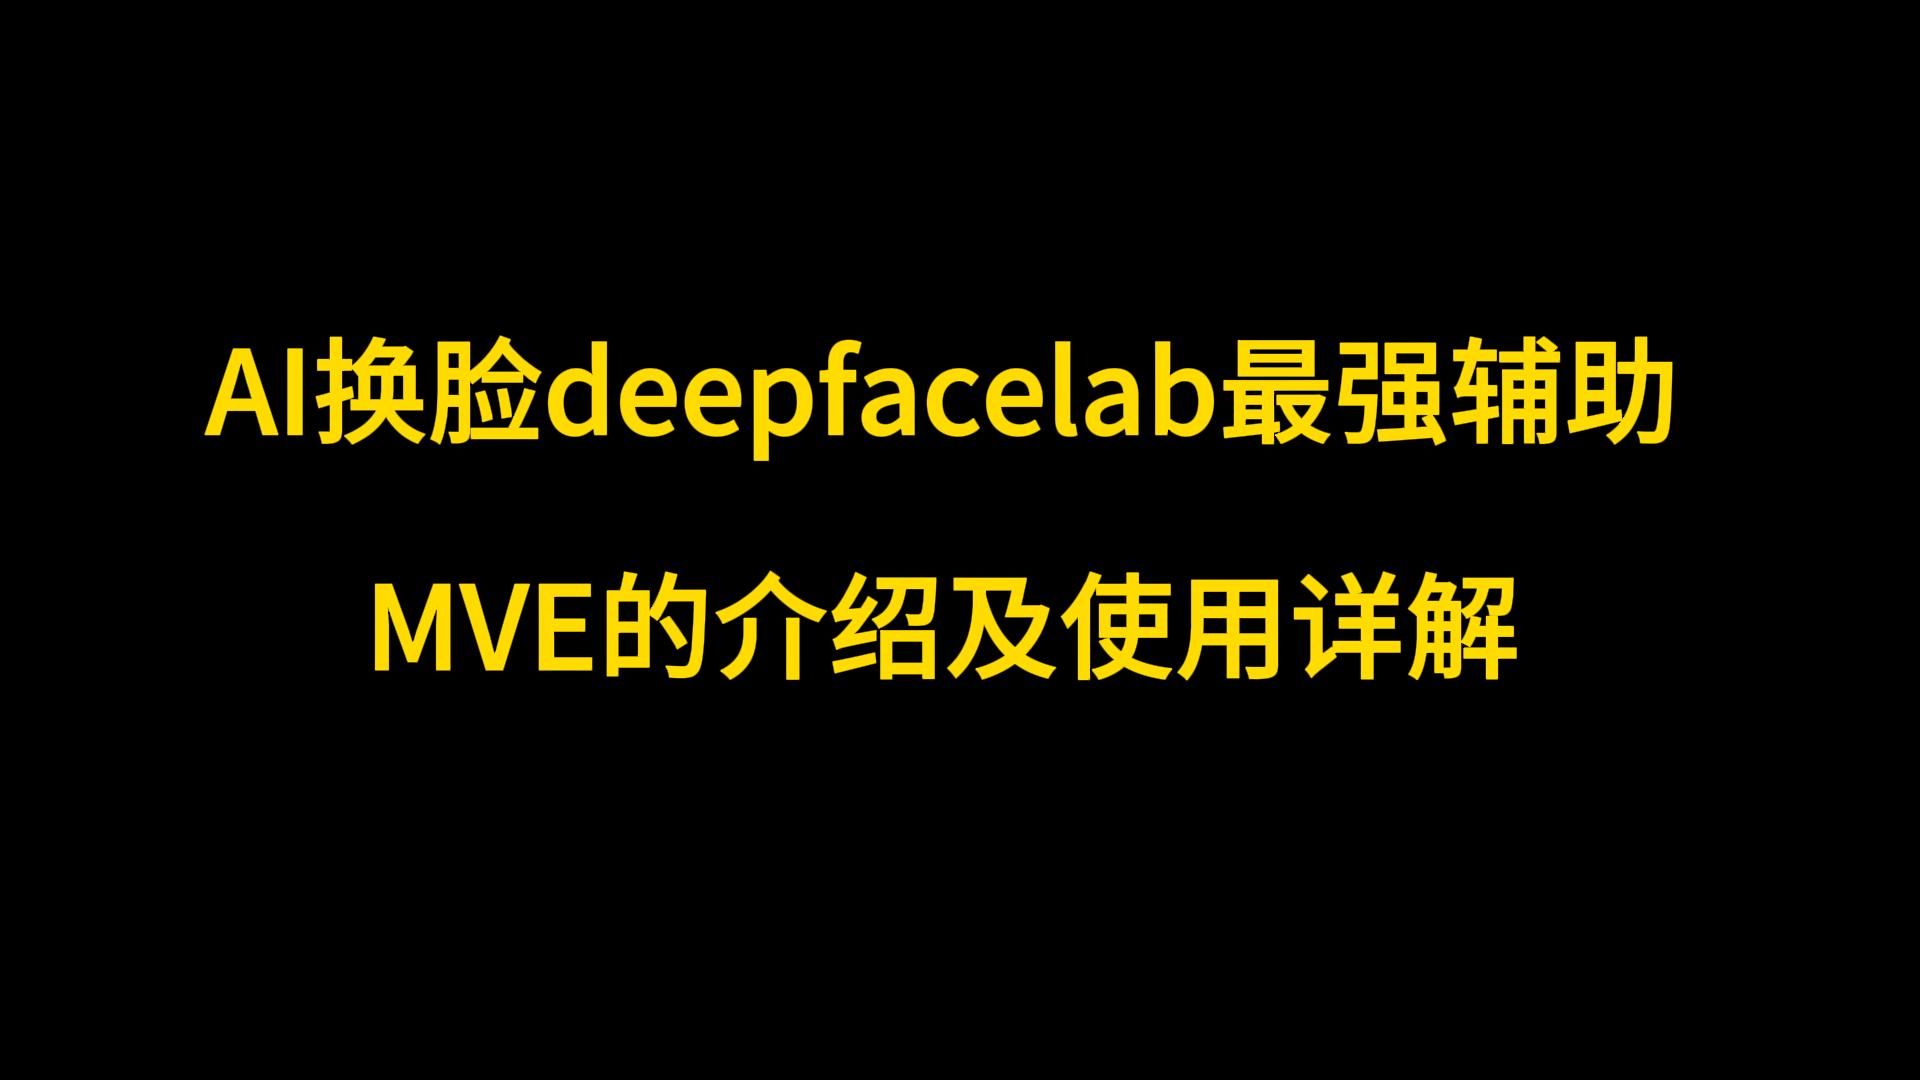 Ai换脸deepfacelab遮罩辅助神器及角度查看——MVE介绍及安装使用讲解